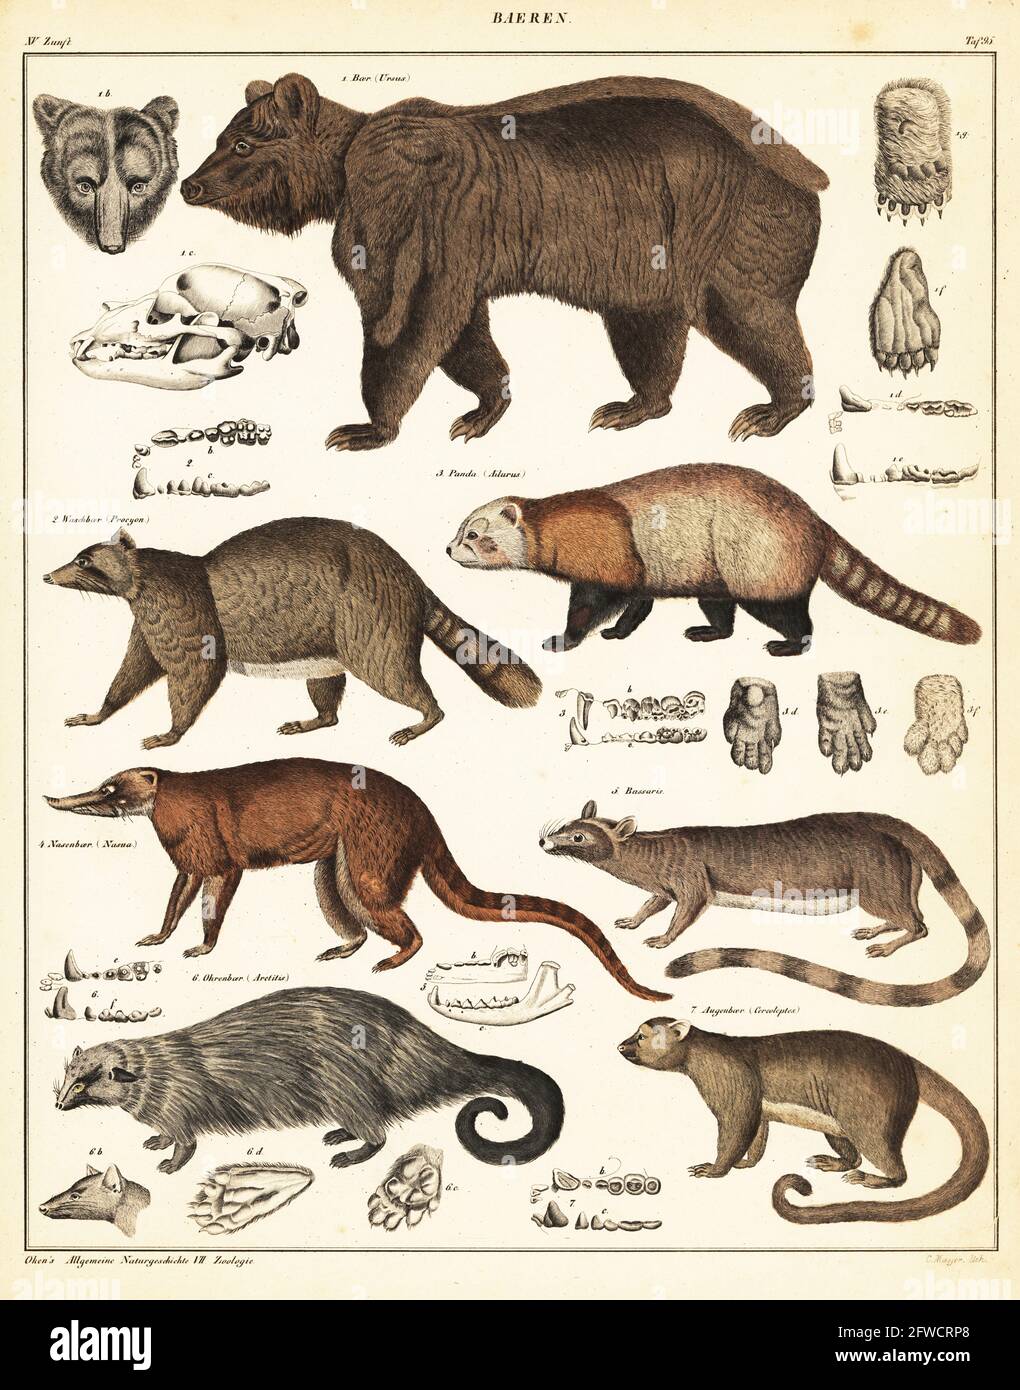 1 brown bear, Ursus arctos, Baer, 2 raccoon, Procyon lotor, Waschbaer, 3 red panda, Ailurus fulgens, Panda, 4 South American coati, Nasua nasua, Nasenbaer, 5 ring-tailed cat, Bassariscus astutus, Bassaris, 6 binturong, Arctictis binturong, Arctitis, Ohrenbaer, 7 kinkajou, Potos flavus, Cercoleptes, Augenbaer. Handcoloured lithograph by C. Mayer from Lorenz Oken's Universal Natural History, Allgemeine Naturgeschichte fur alle Stande, Stuttgart, 1841. Stock Photo